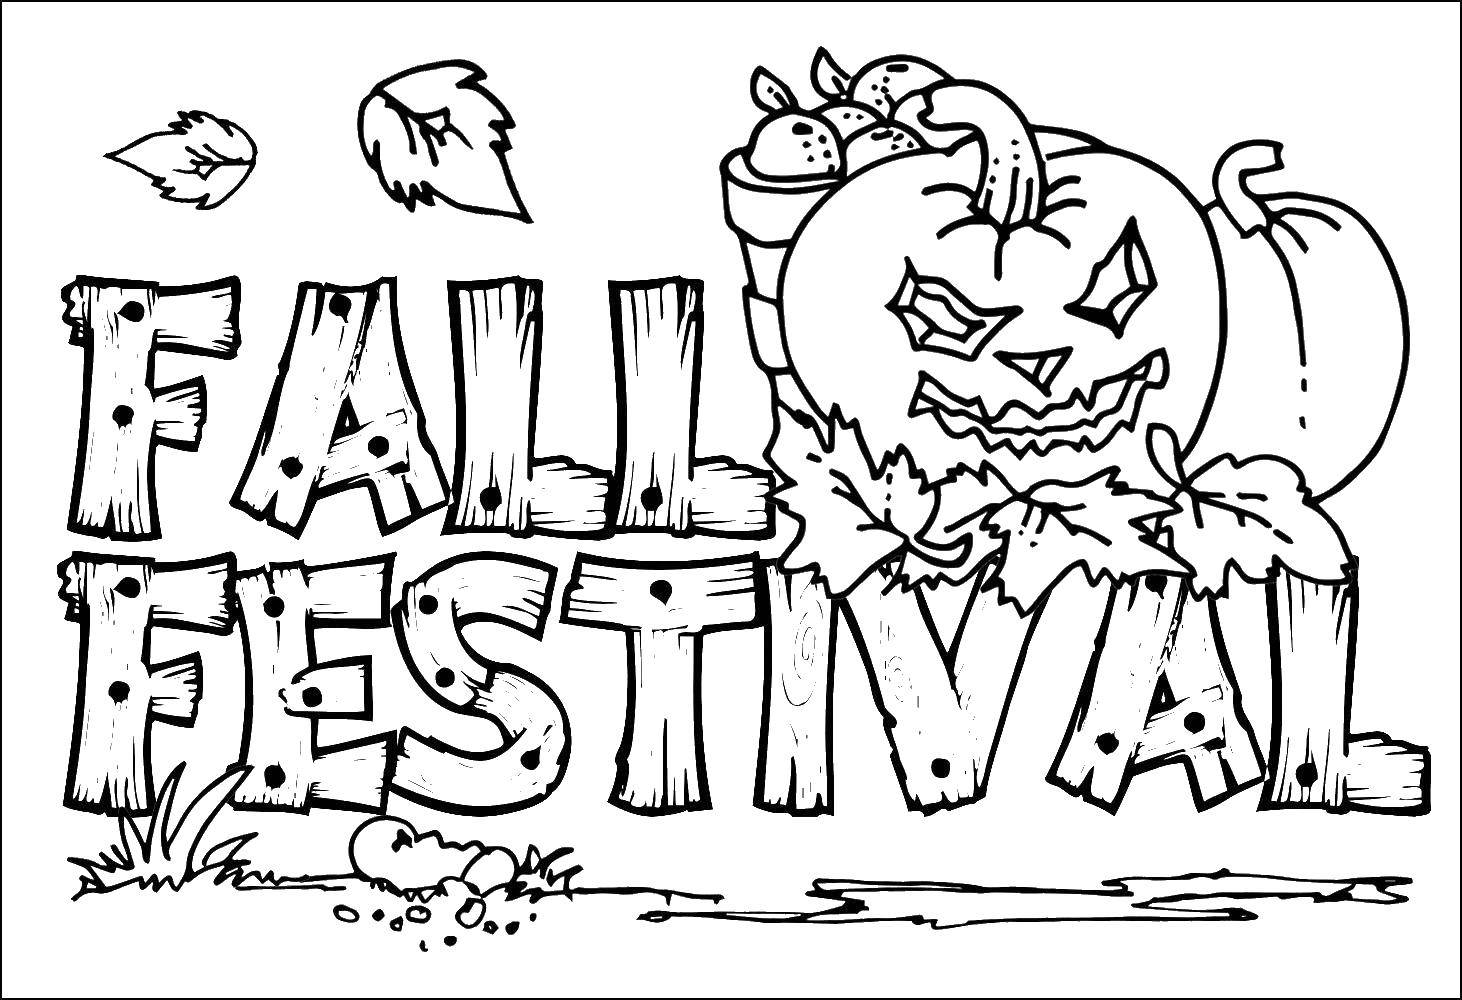 Coloring Halloween evil pumpkin. Category Halloween. Tags:  pumpkin.